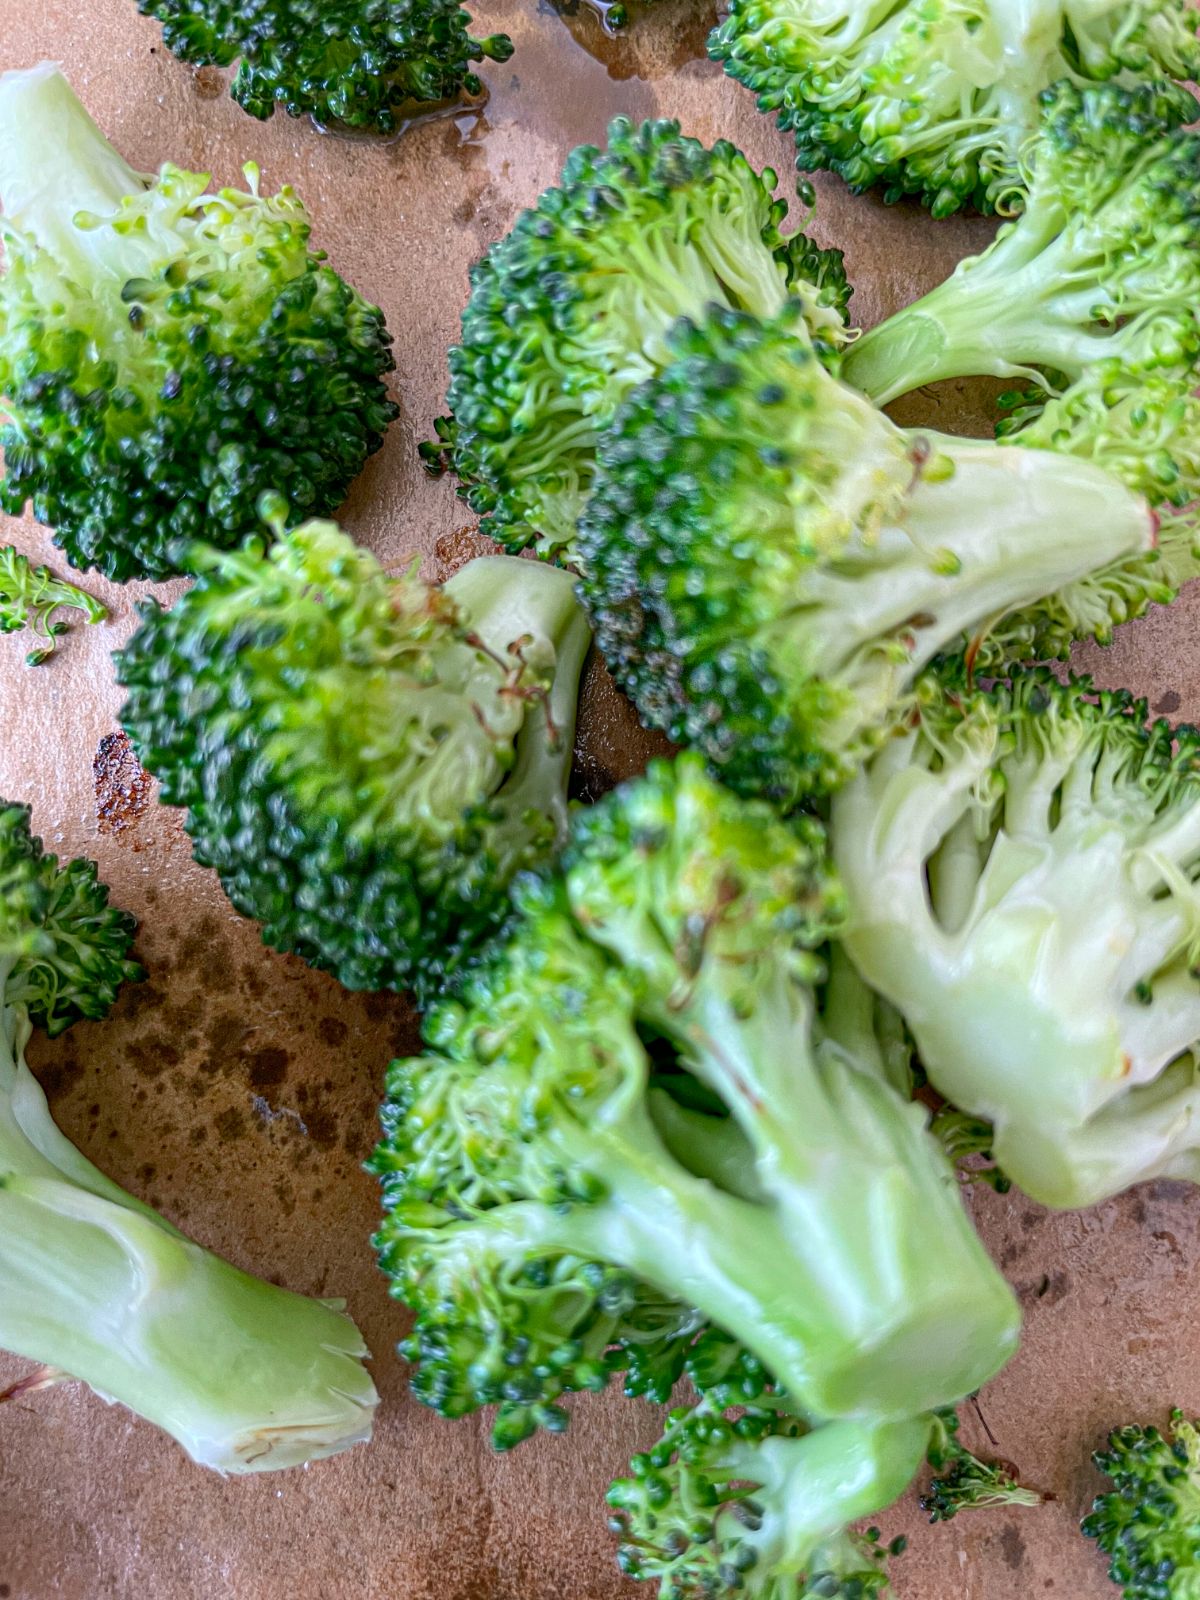 bake broccoli head for 10 mins